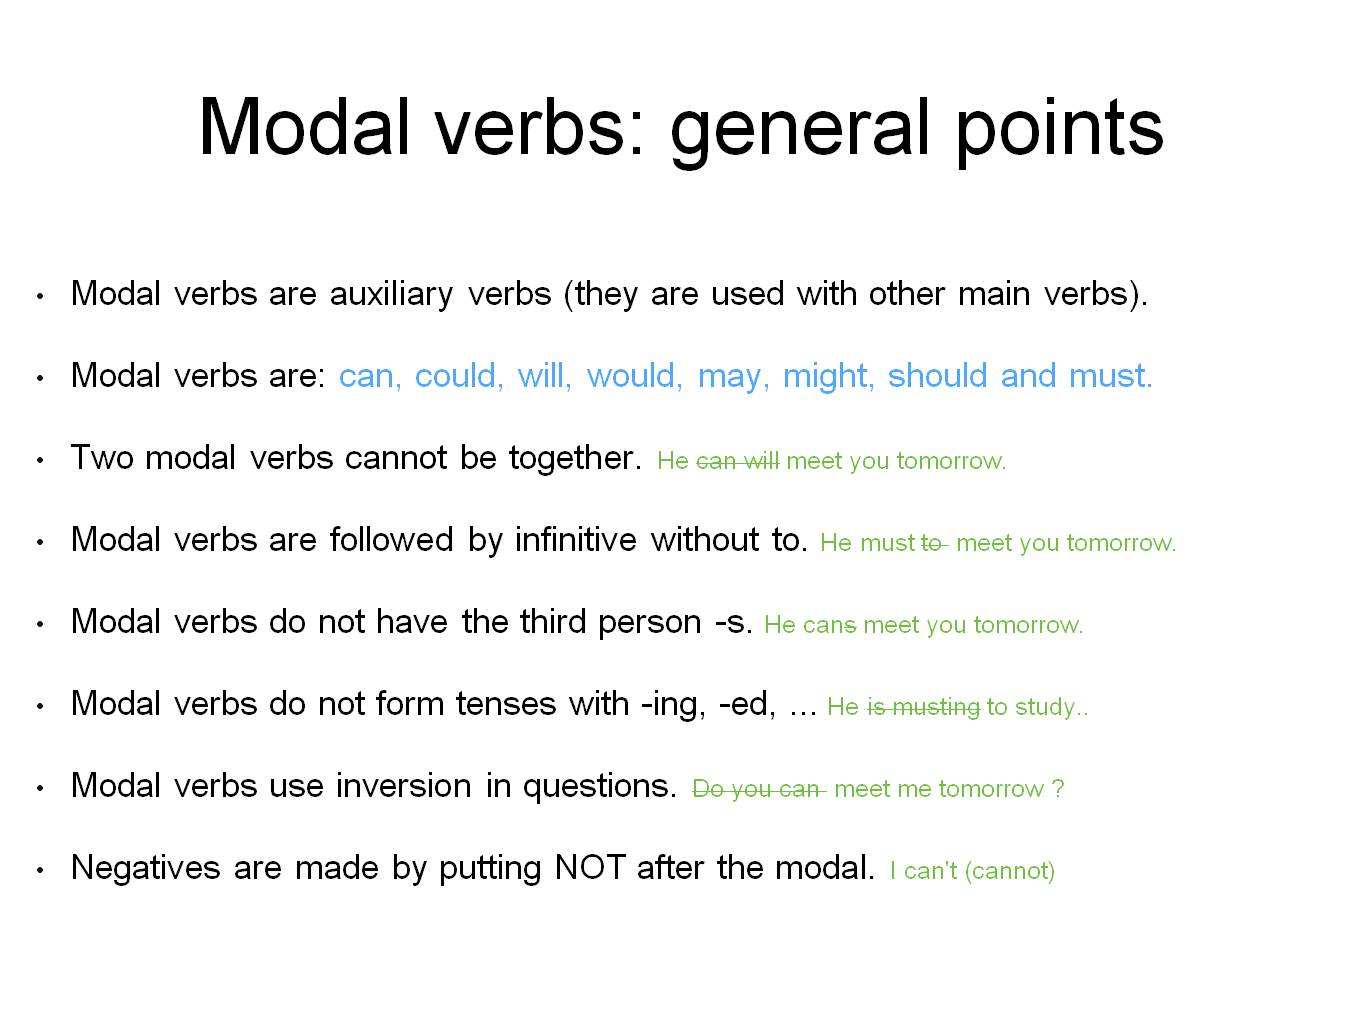 Тест модальные глаголы 8 класс. Modal verbs упражнения. Задания на модальный глагол can. Used to модальный глагол.